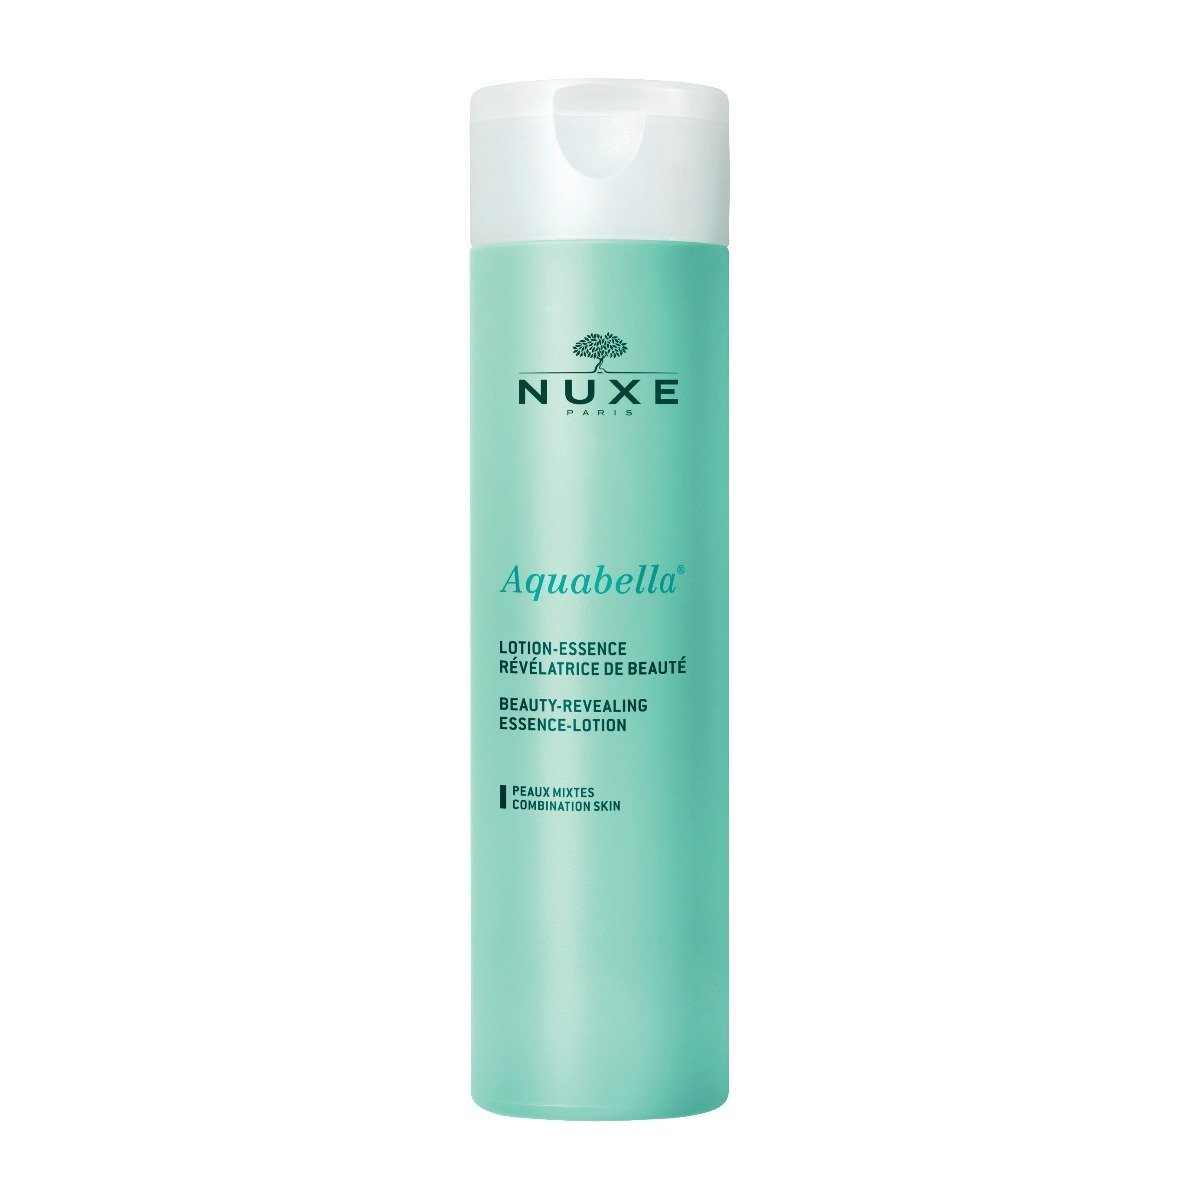 Nuxe Aquabella Beauty Revealing Essence Lotion - 200ml - Bloom Pharmacy